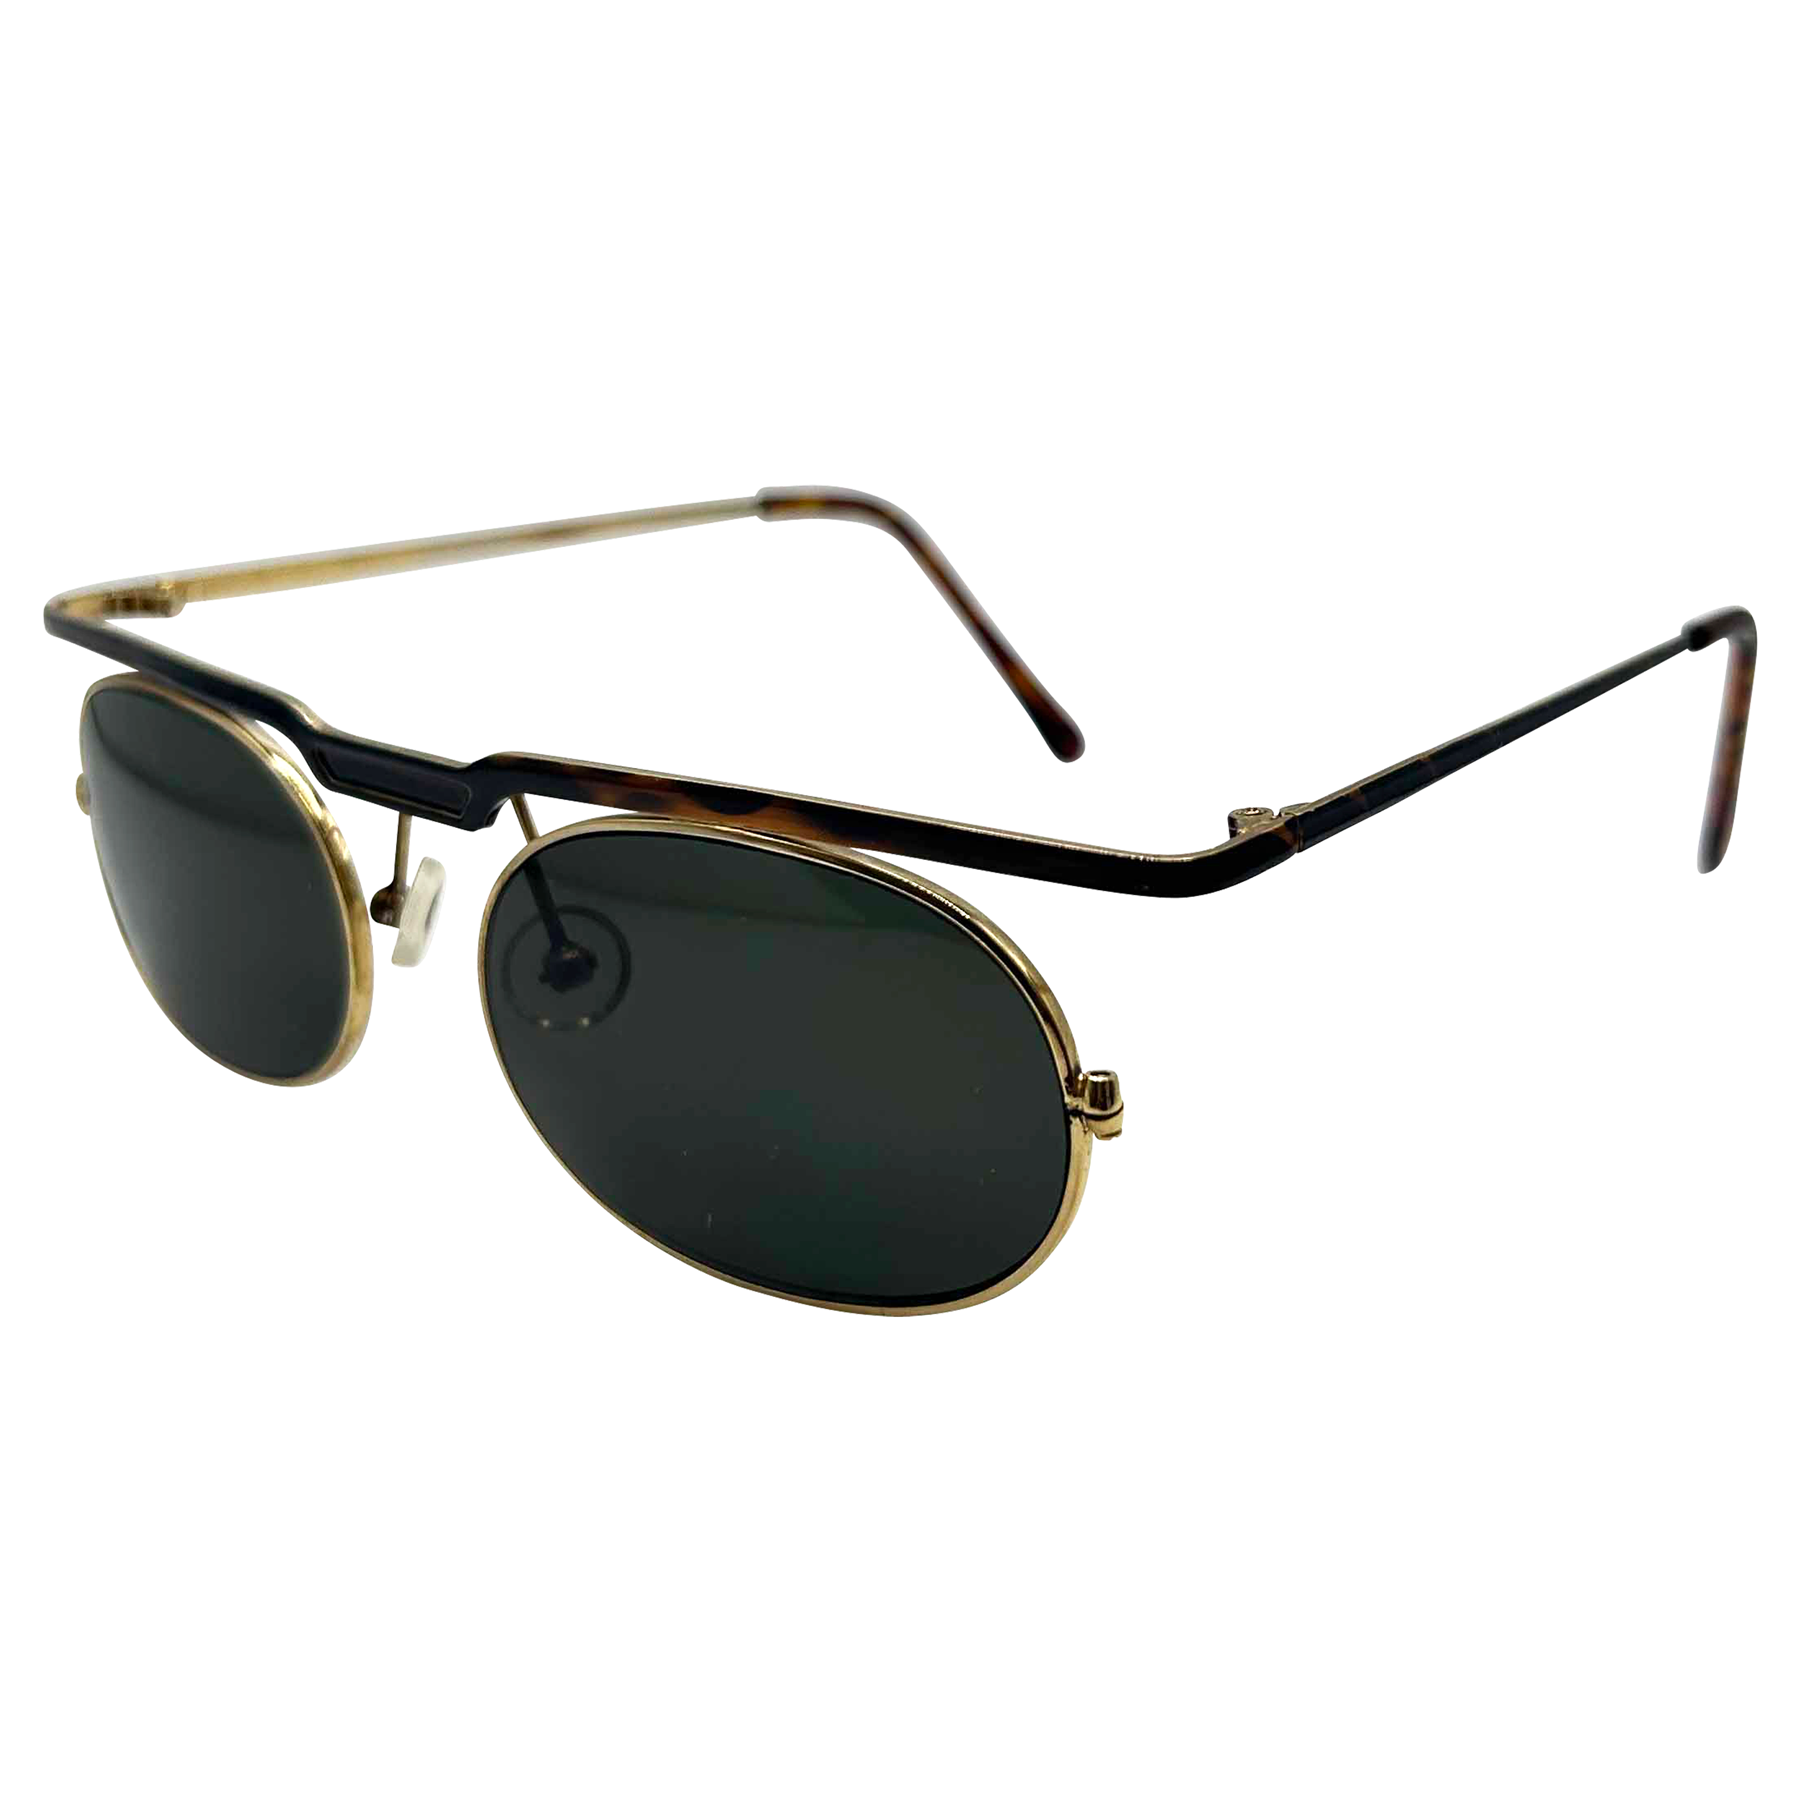 TWIN PEAKS Steampunk 90s Sunglasses